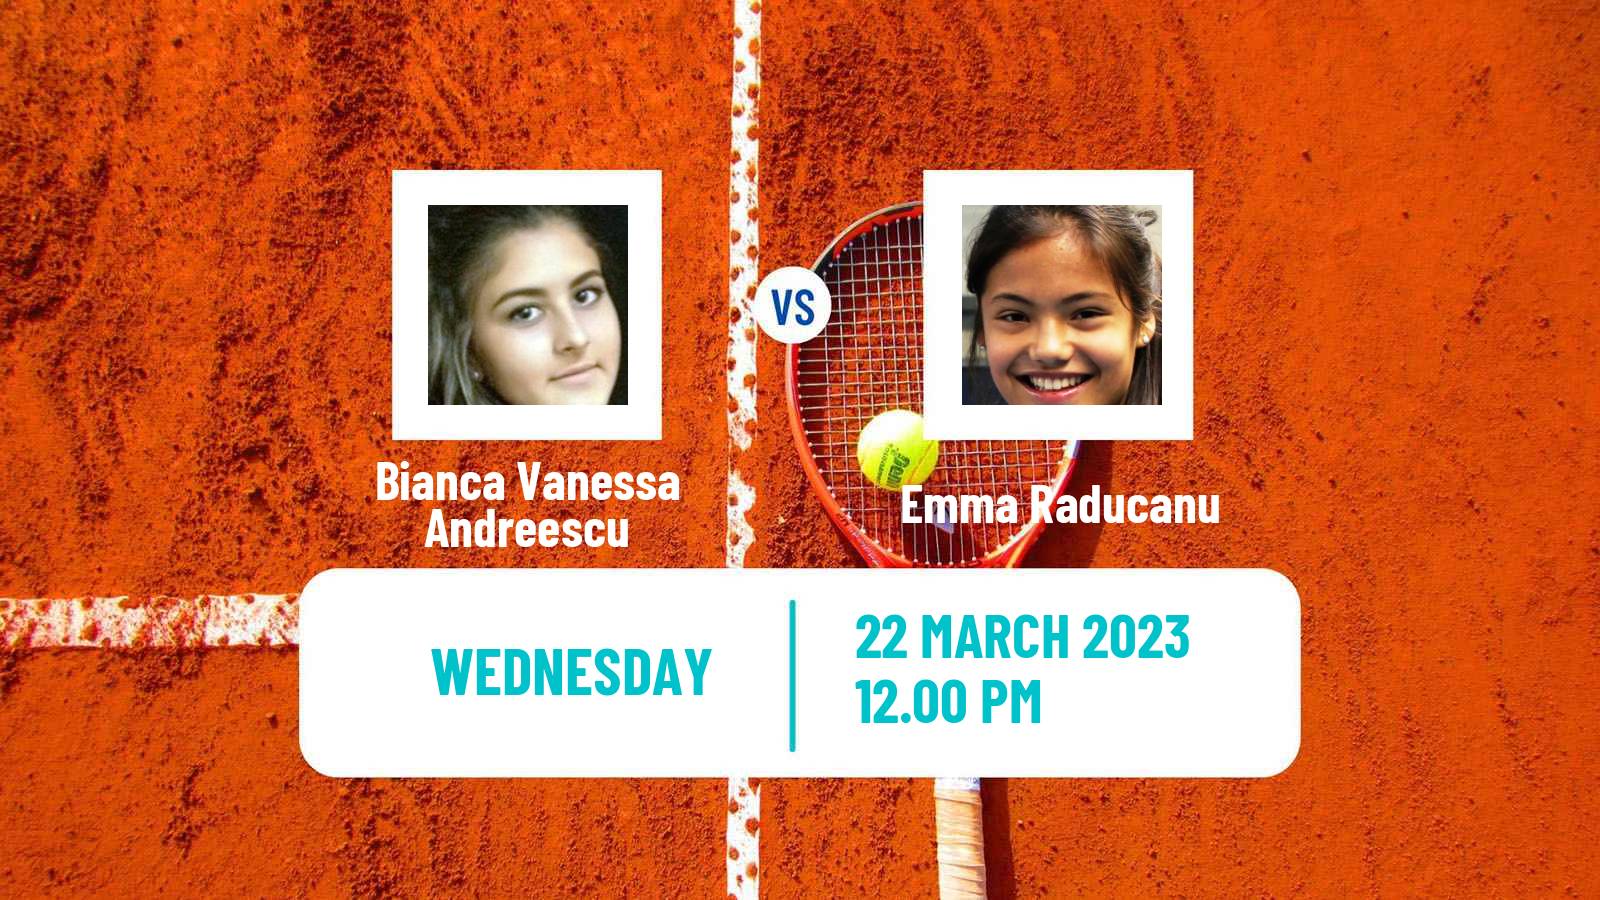 Tennis WTA Miami Bianca Vanessa Andreescu - Emma Raducanu